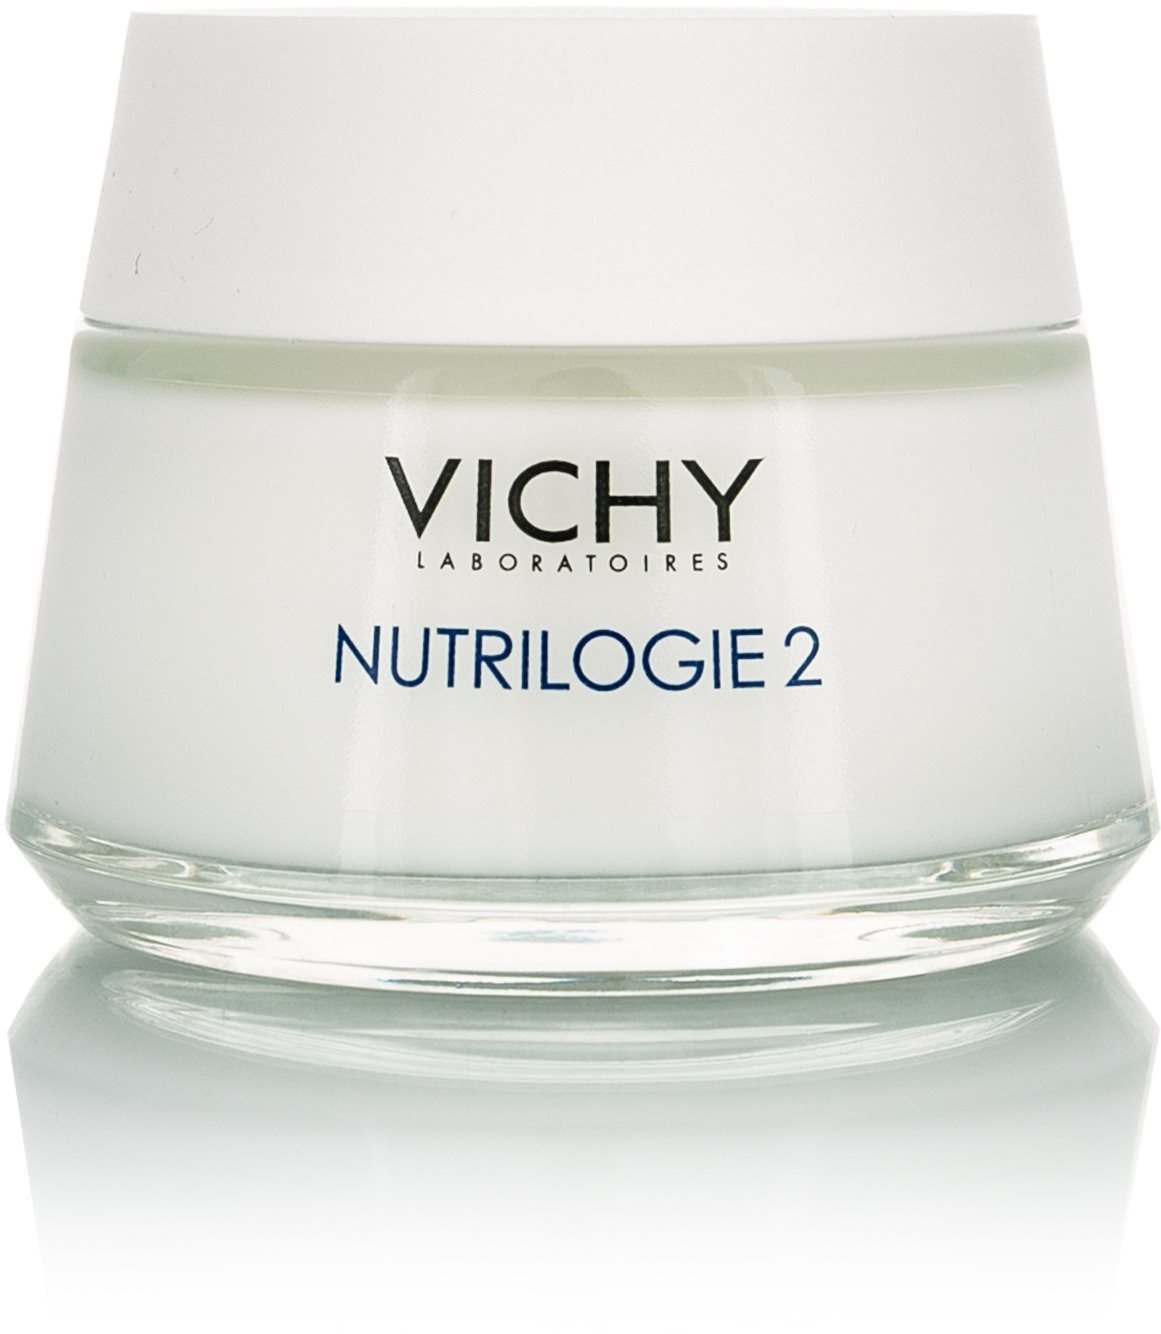 Arckrém VICHY Nutrilogie 2 Day Cream Extreme Dry Skin 50 ml